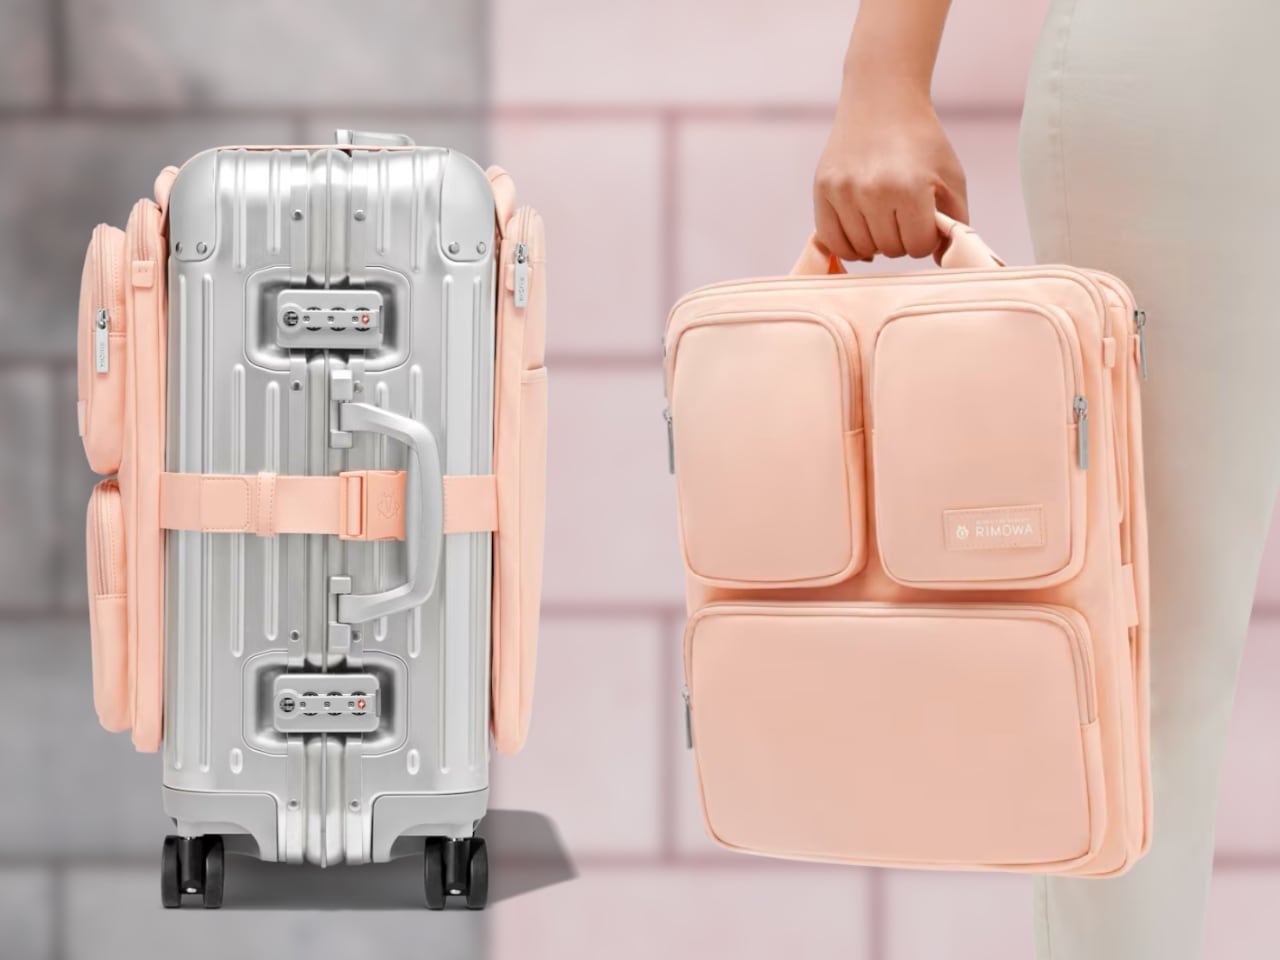 RIMOWA Rimowa suitcase essential business luggage case boarding